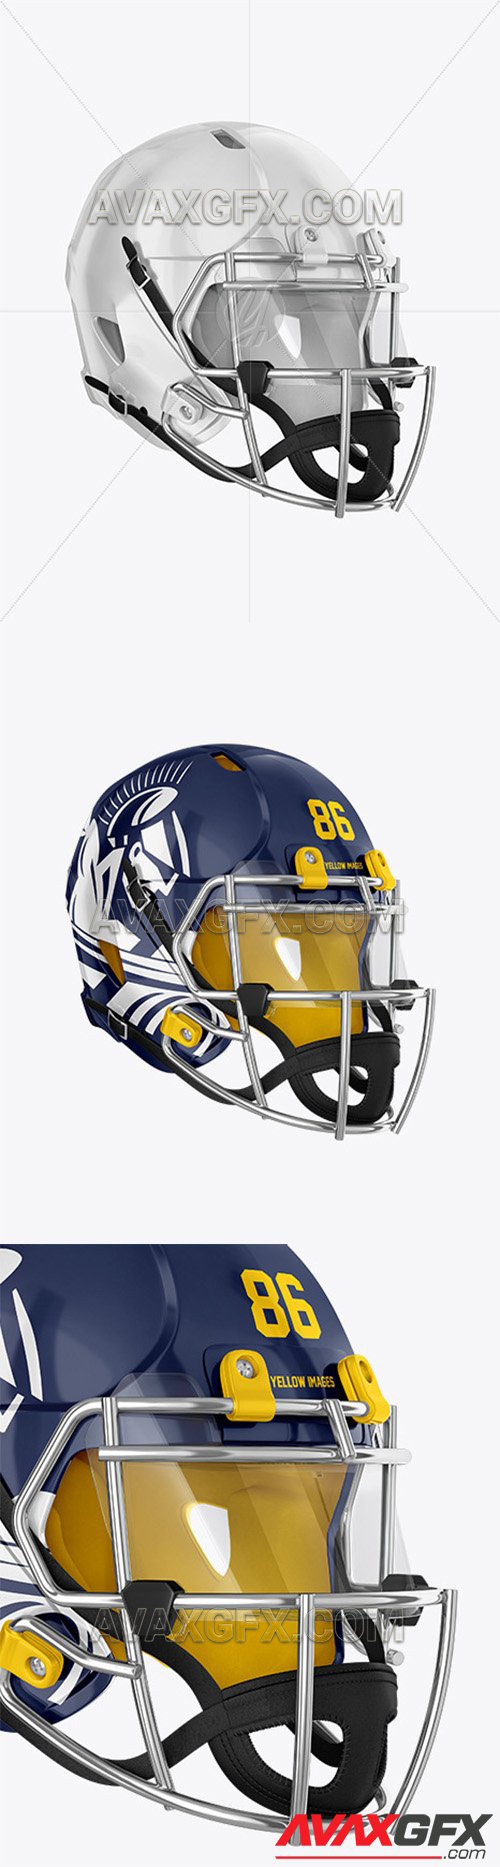 American Football Helmet Mockup - HalfSide View 59678